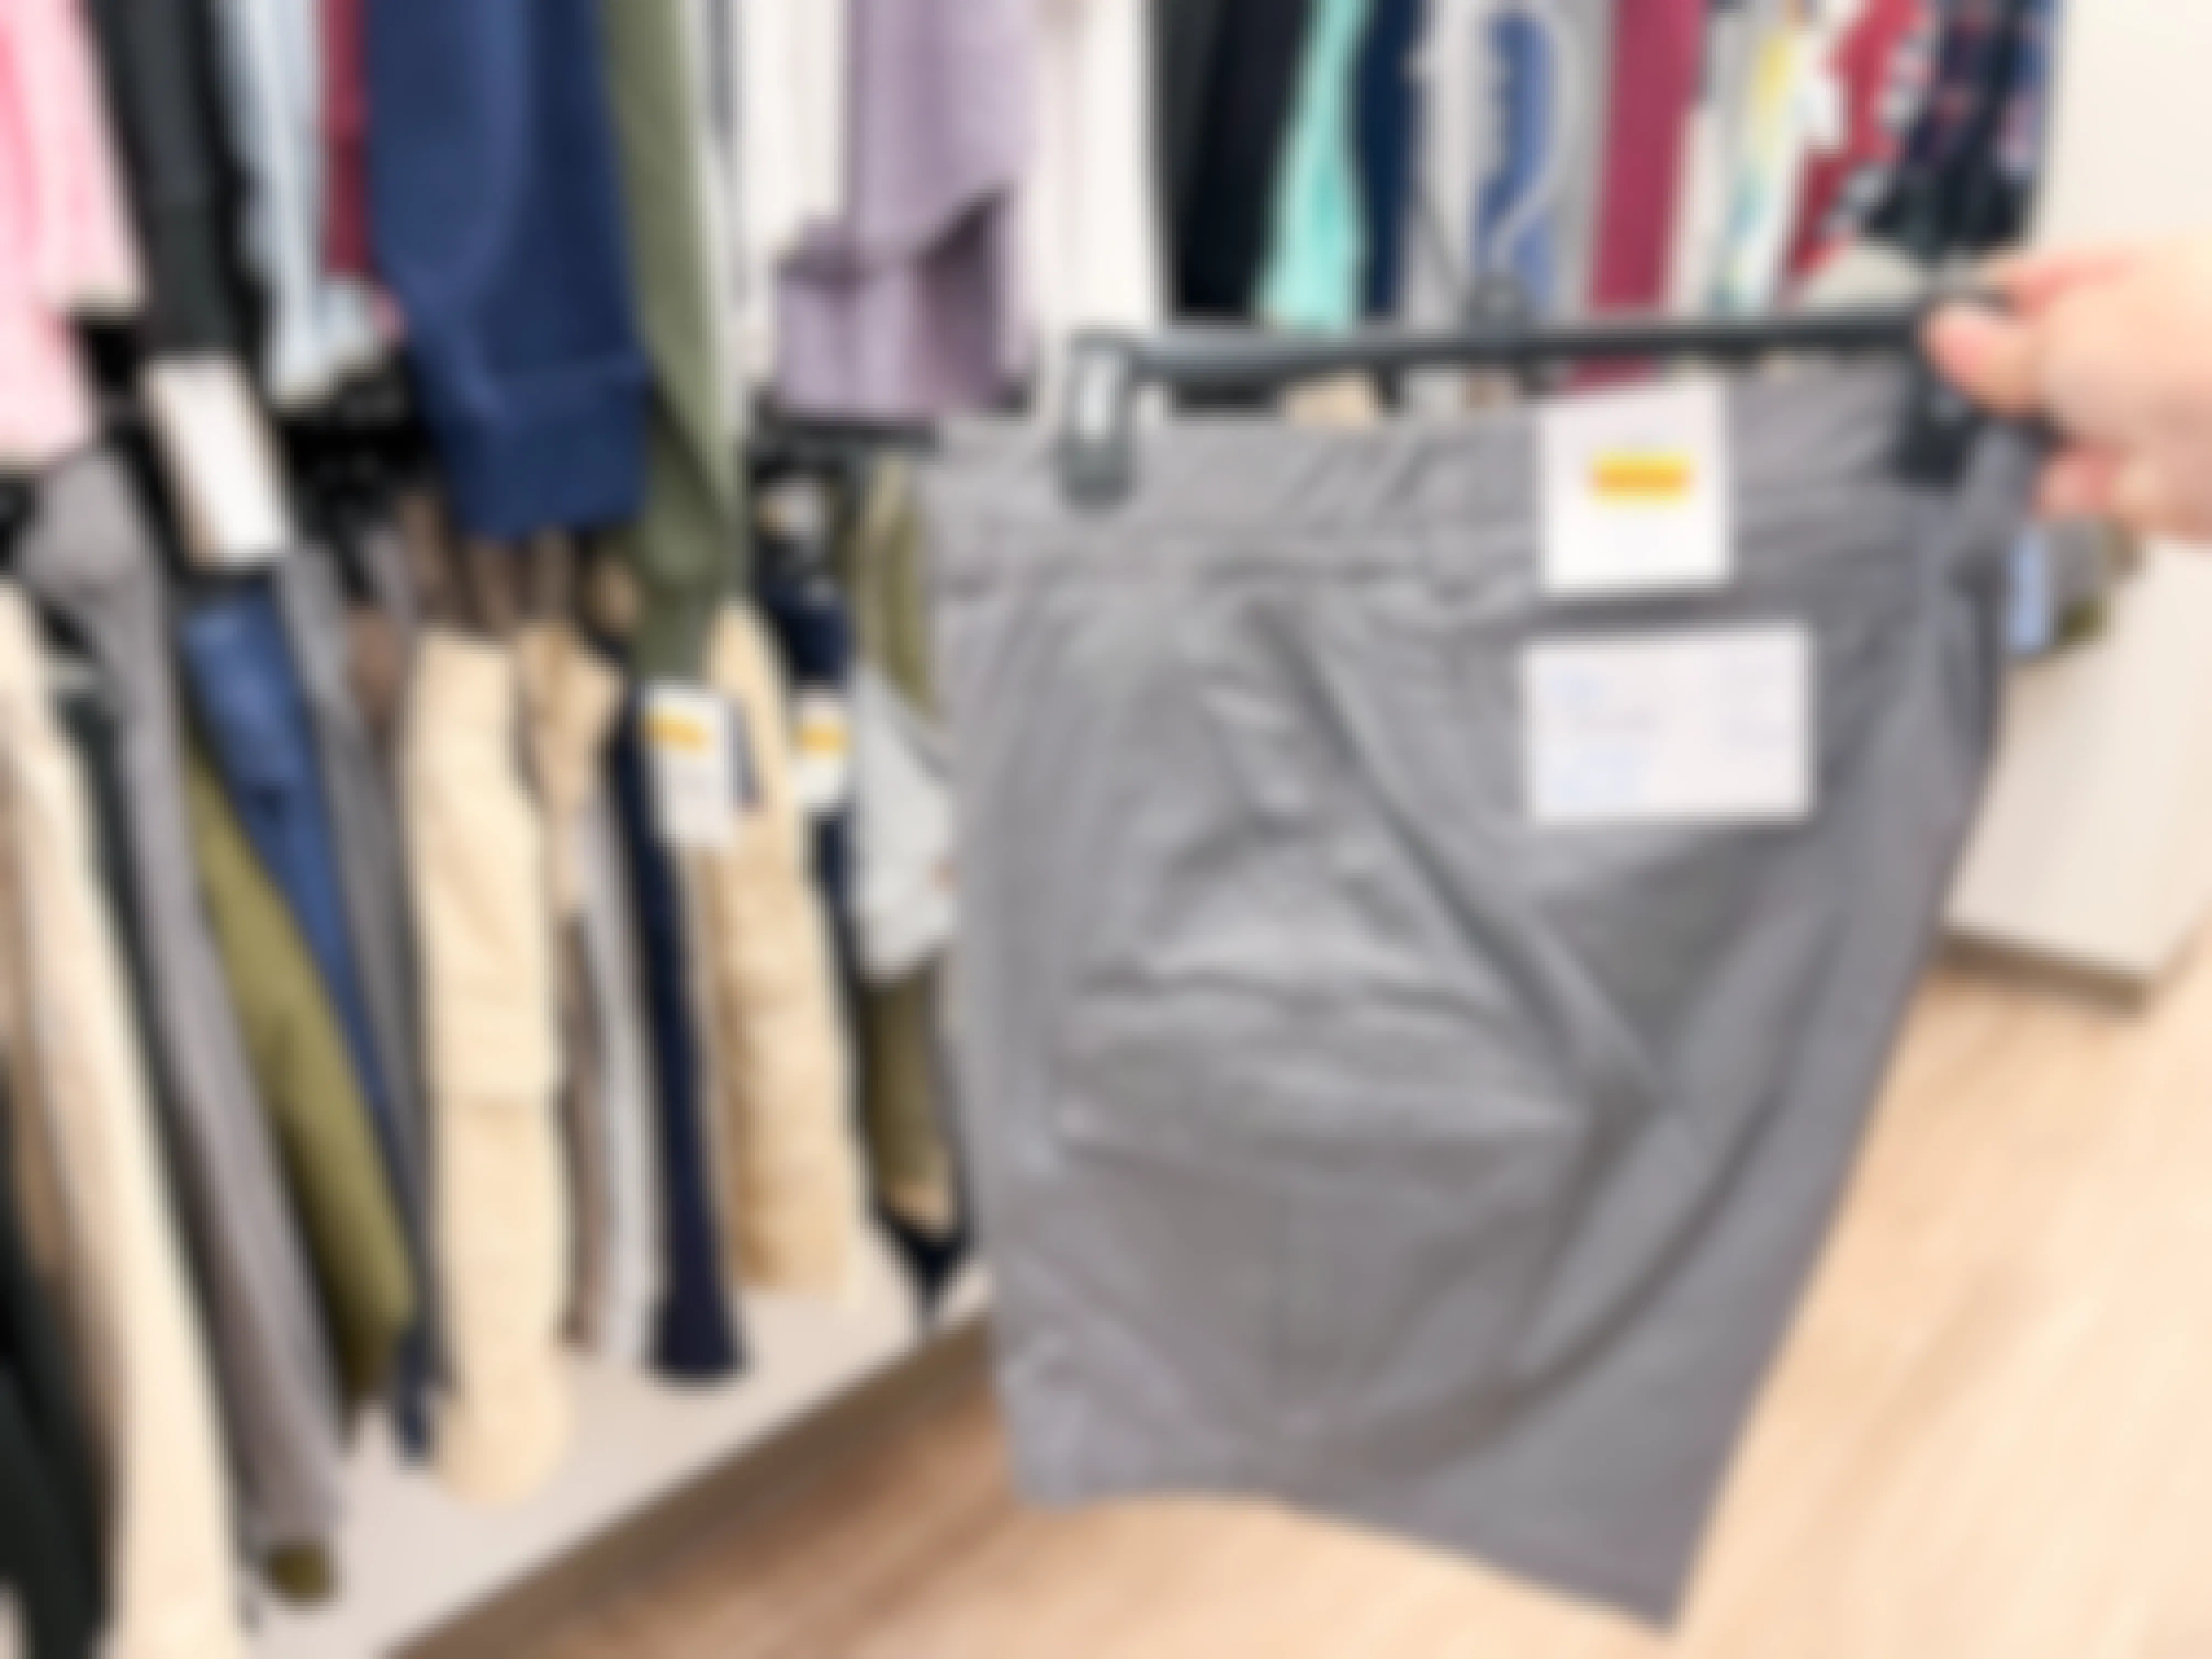 mens cargo shorts